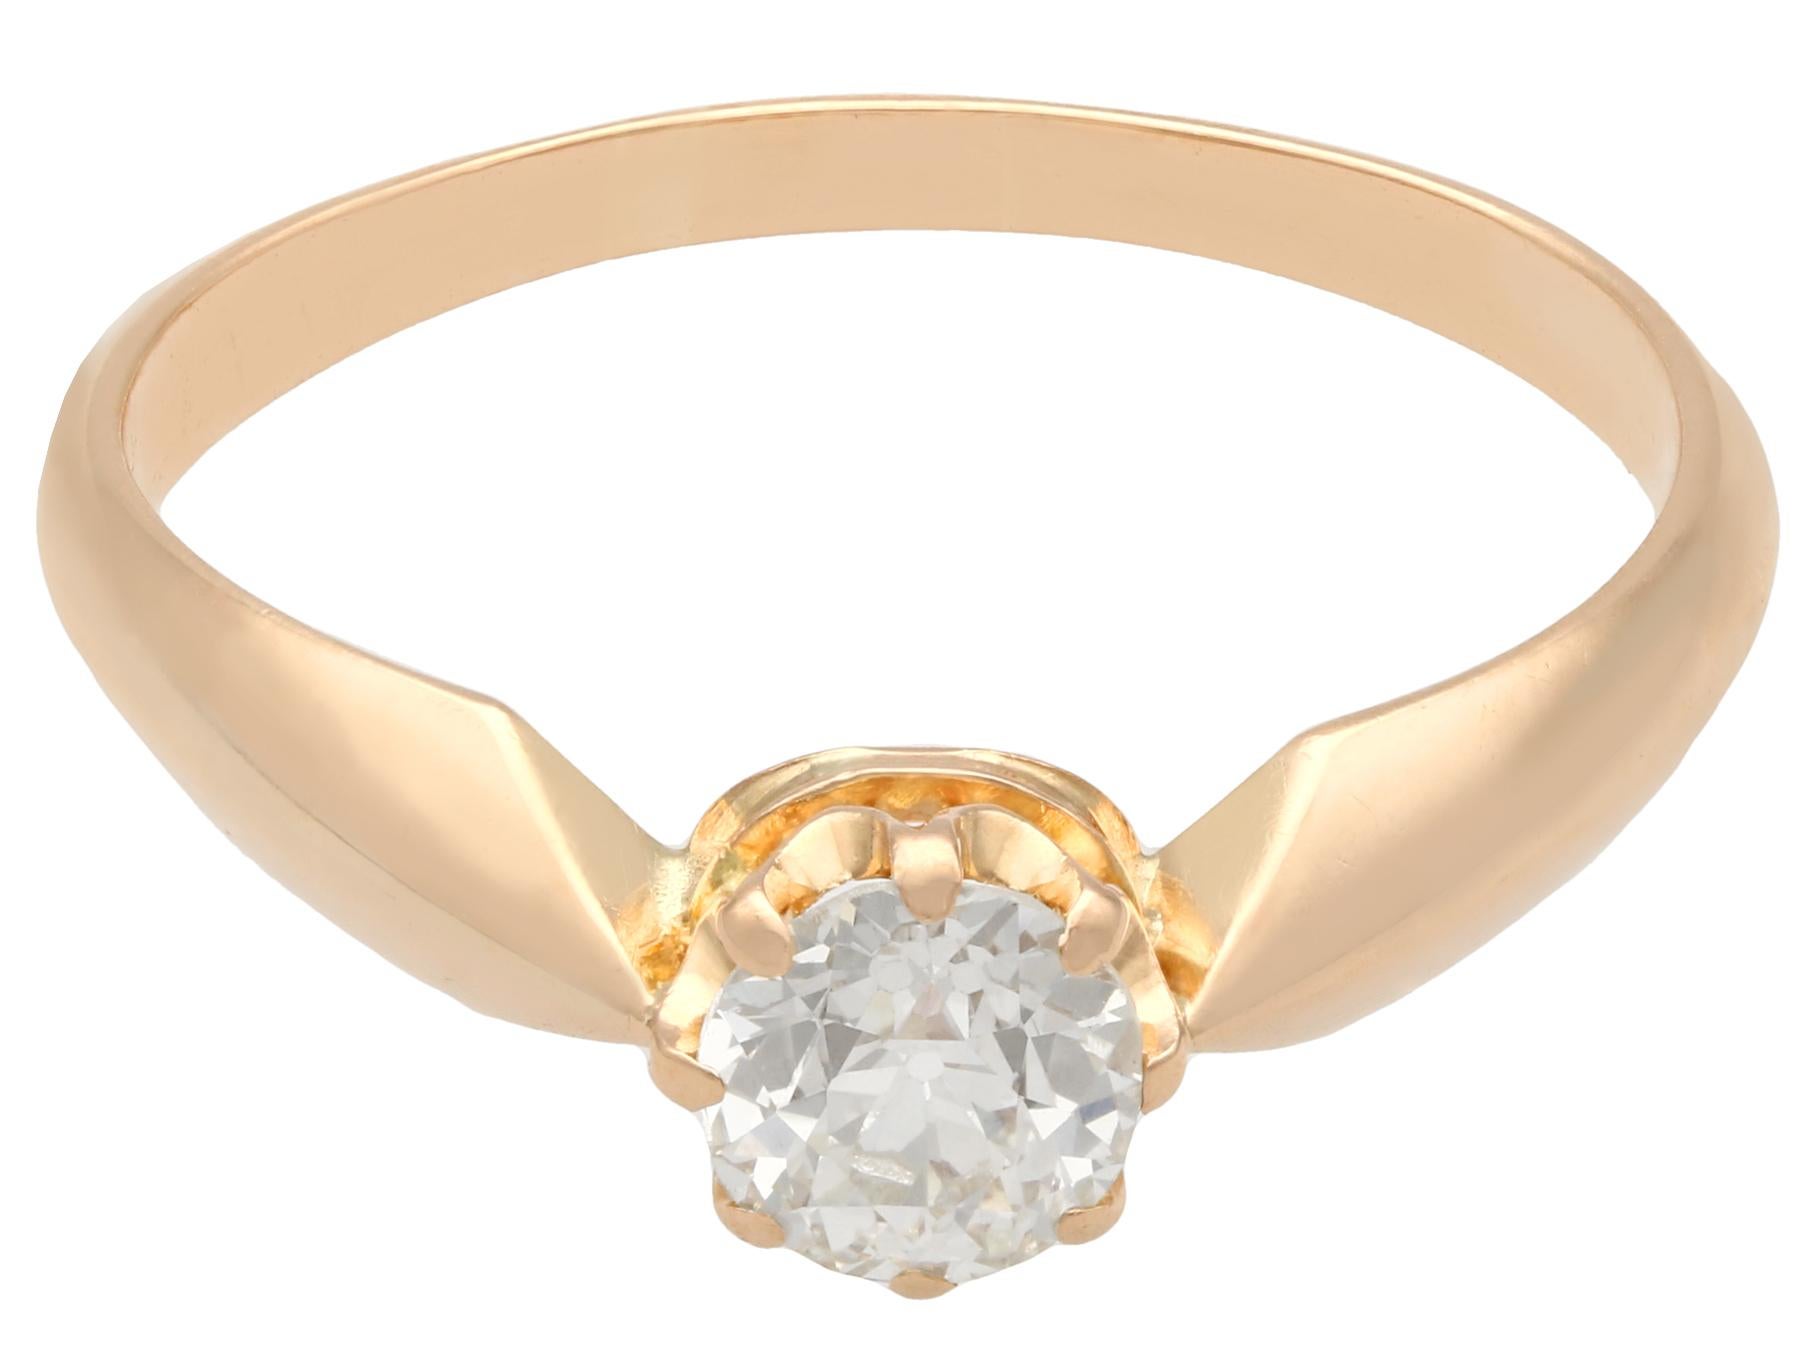 1910 diamond engagement ring